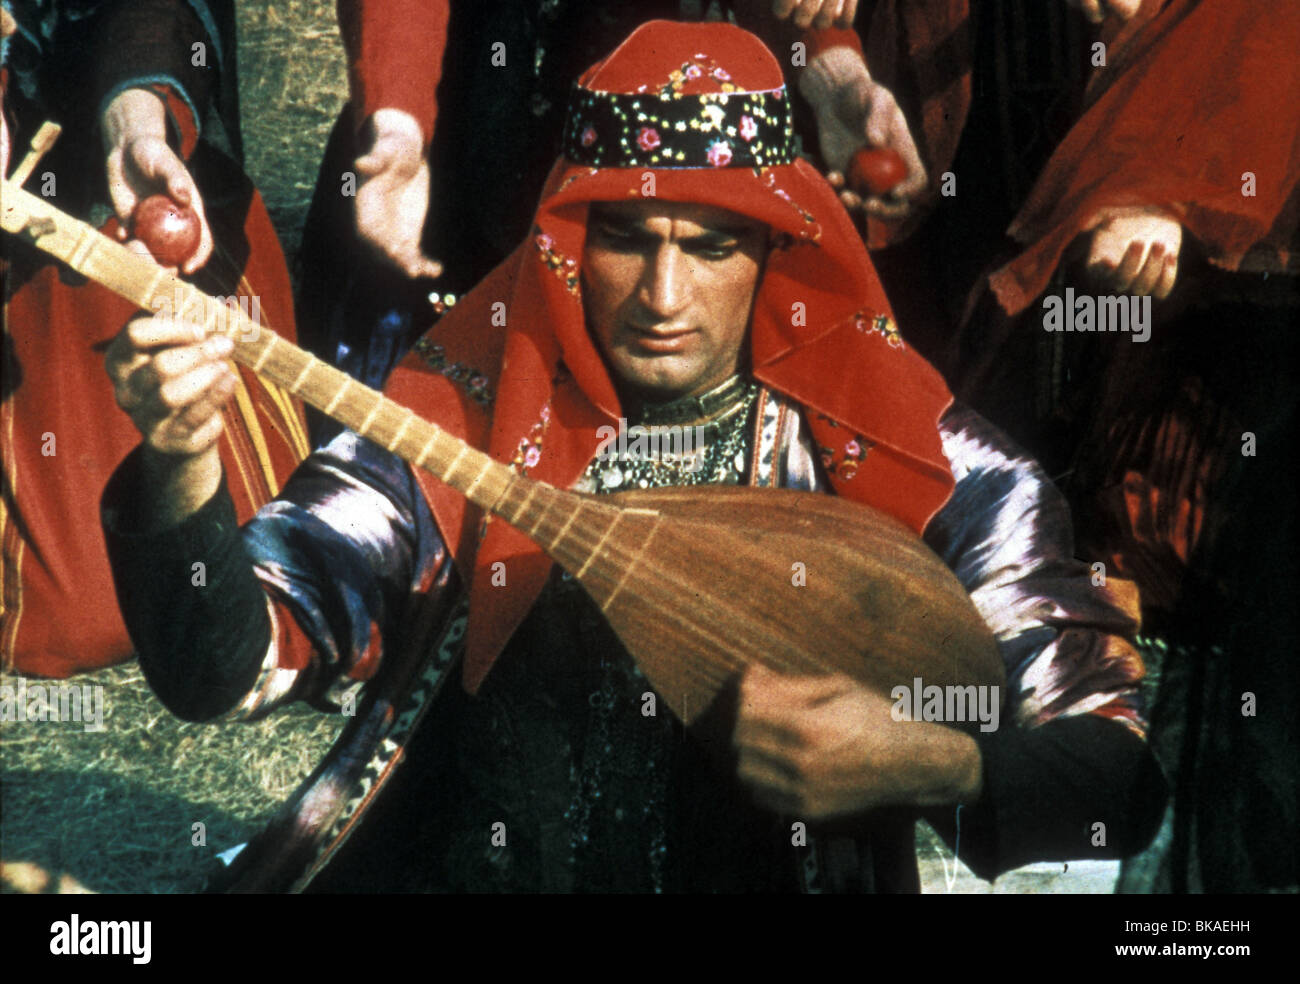 Ashug Karibi año:1988 - Unión Soviética / Georgia Director: Sergei Parajanov Yuri Mgoyan Foto de stock